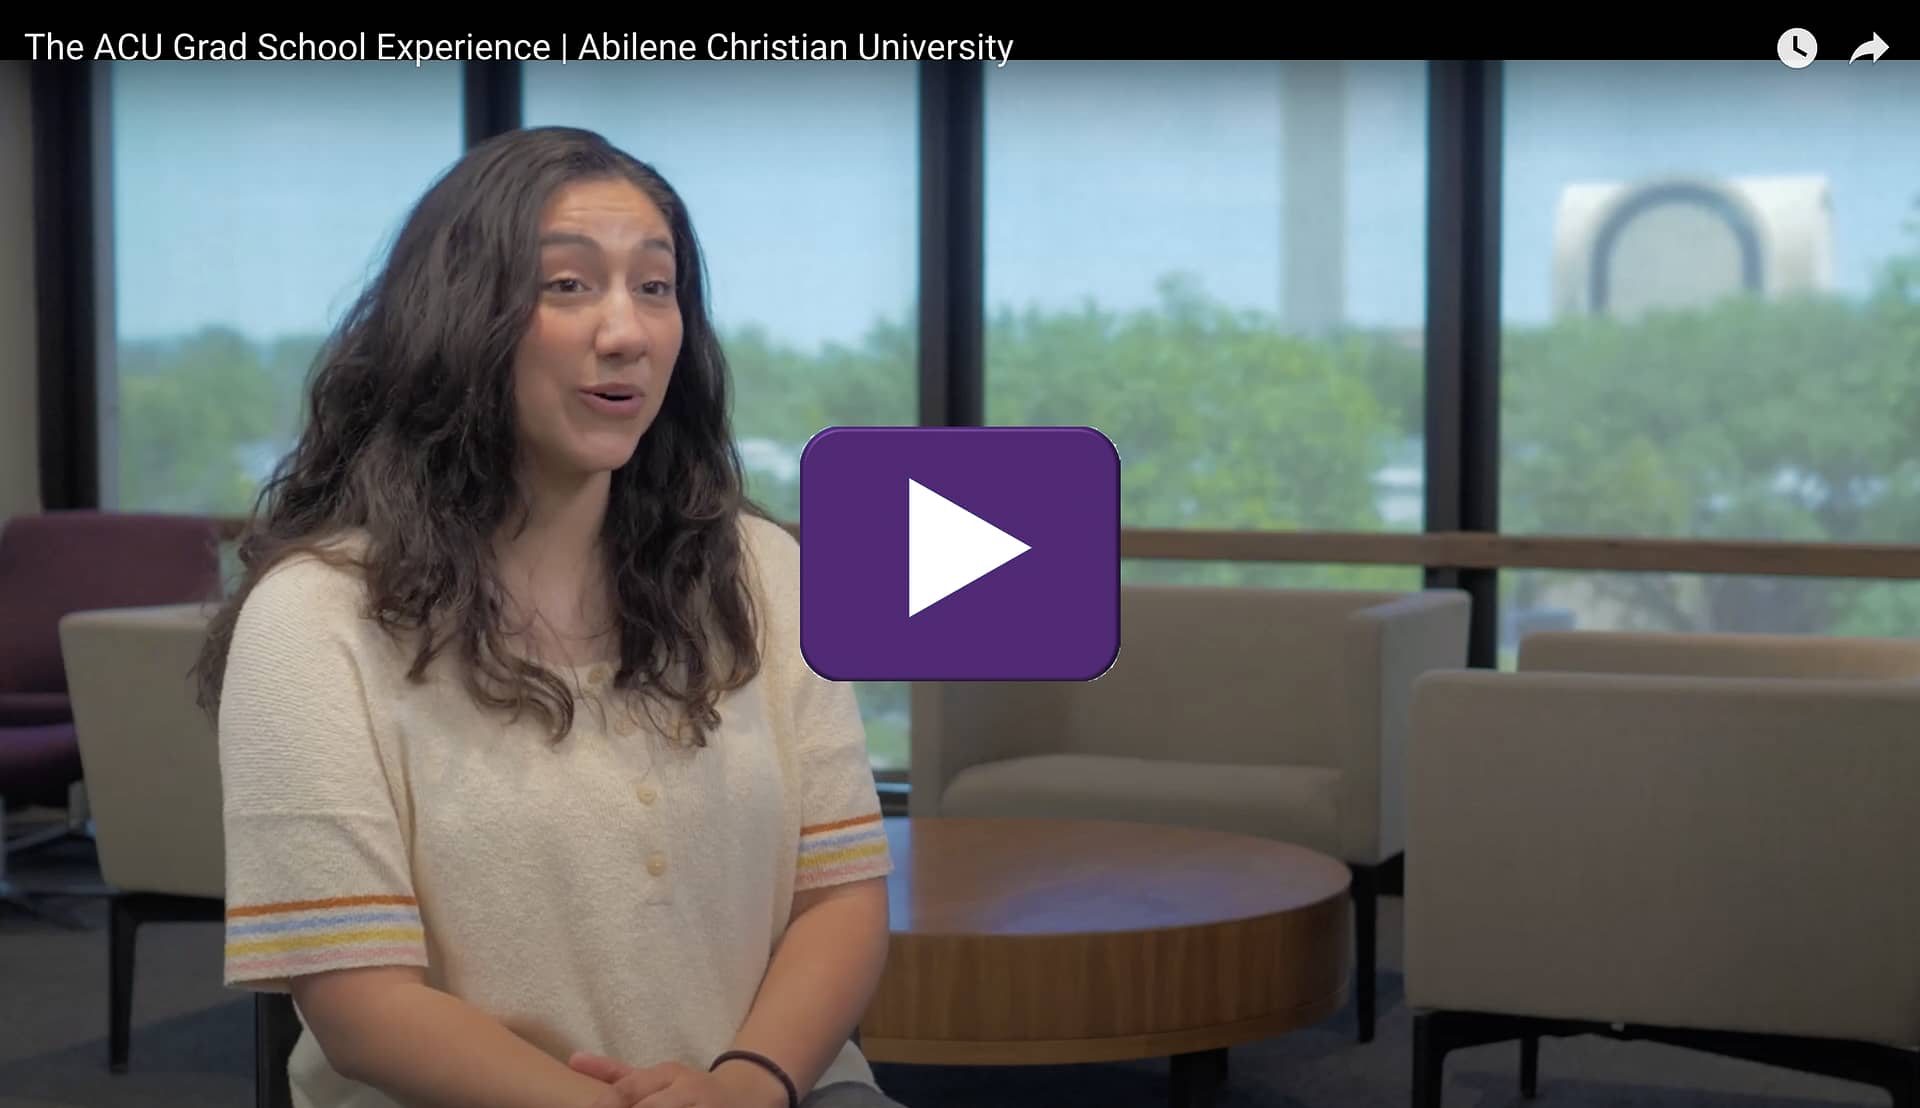 The ACU Grad School Experience at Abilene Christian University